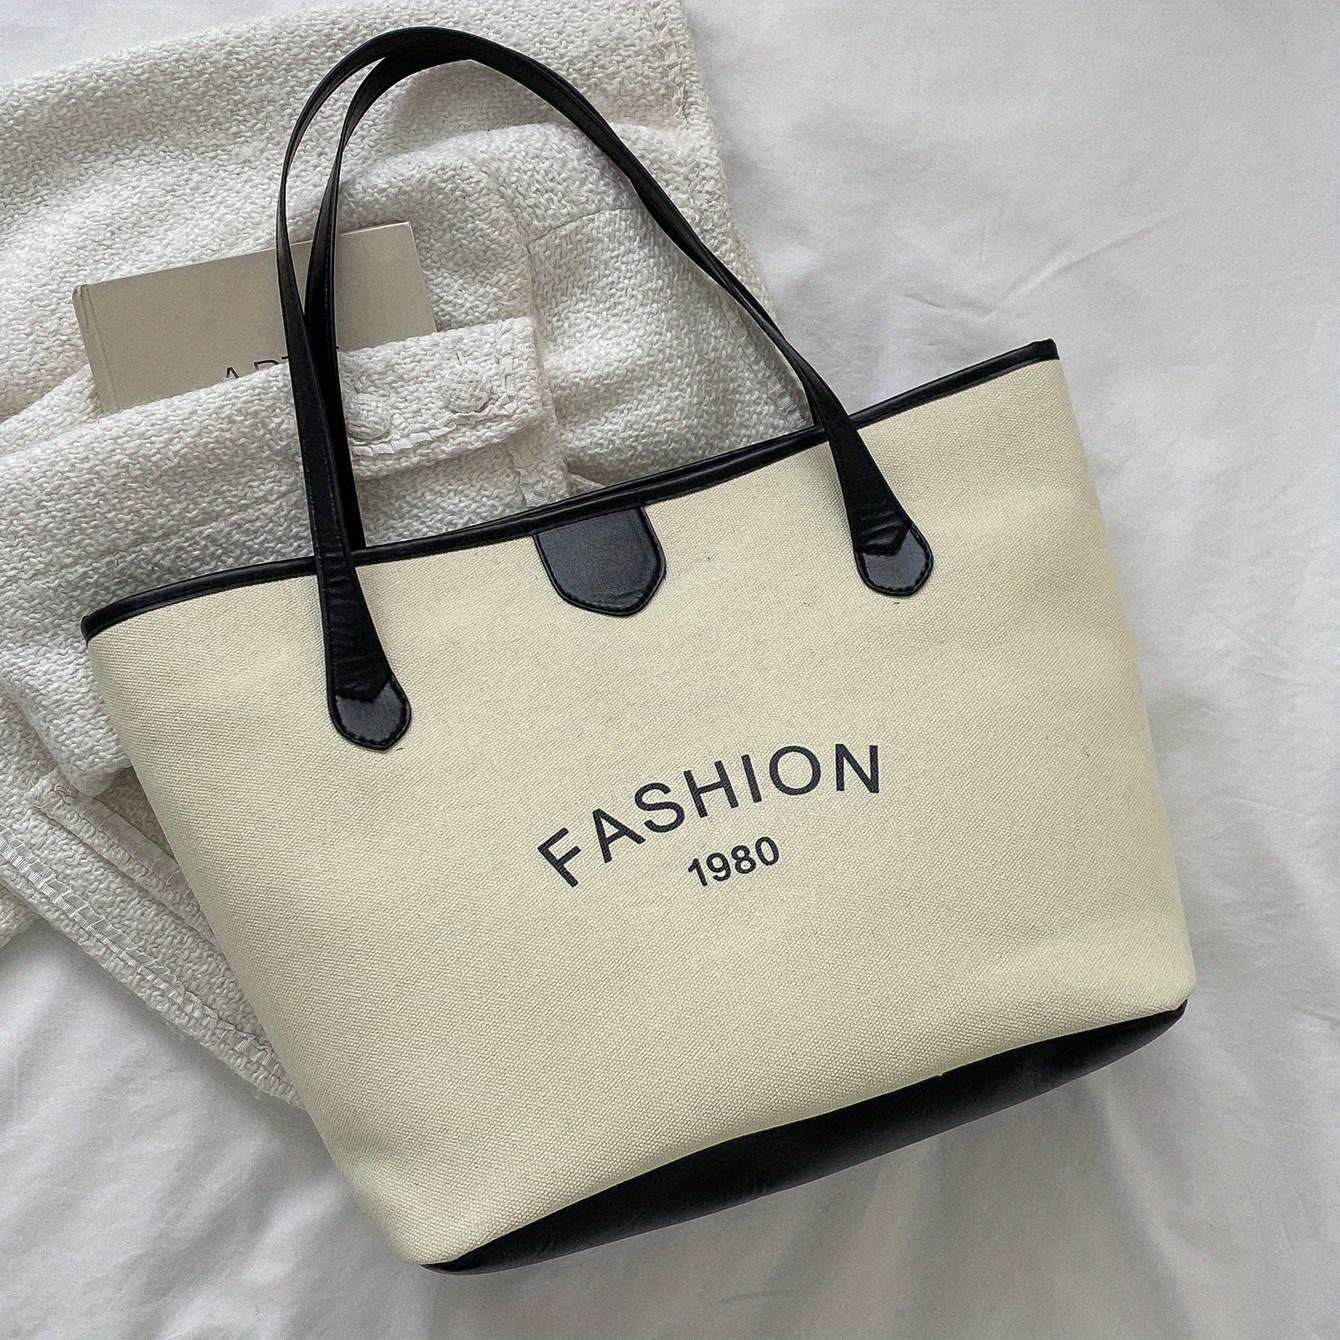 Longchamp Roseau Shopping Tote Bag in White